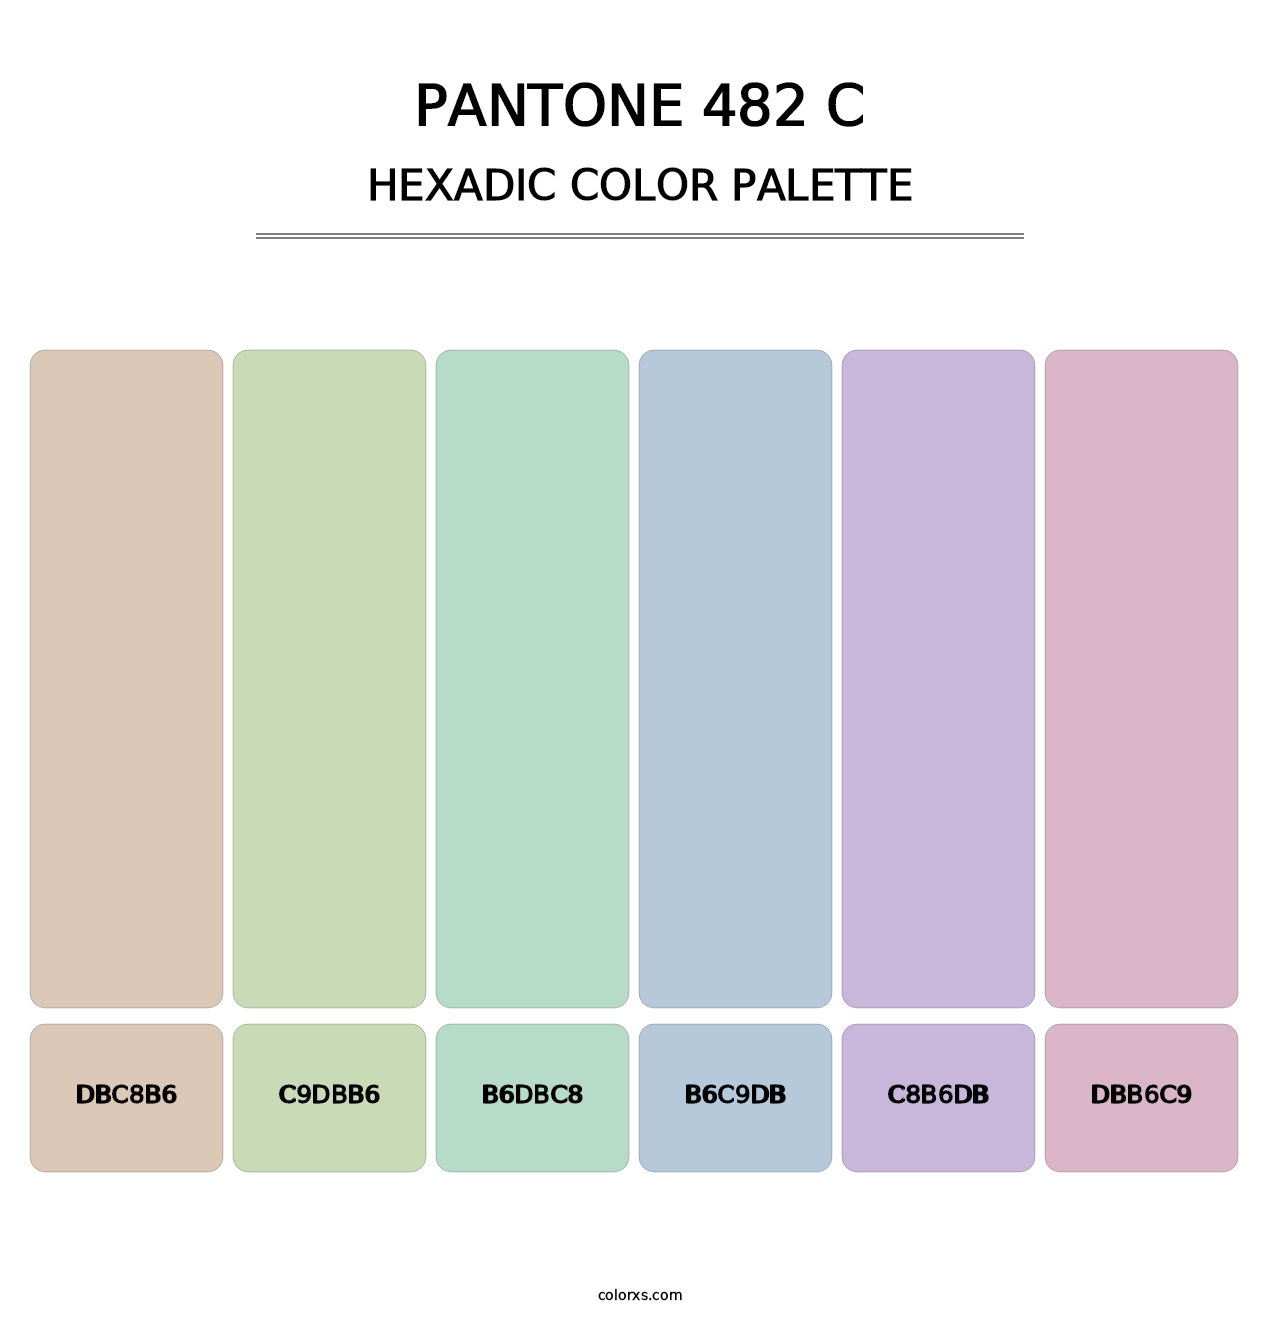 PANTONE 482 C - Hexadic Color Palette